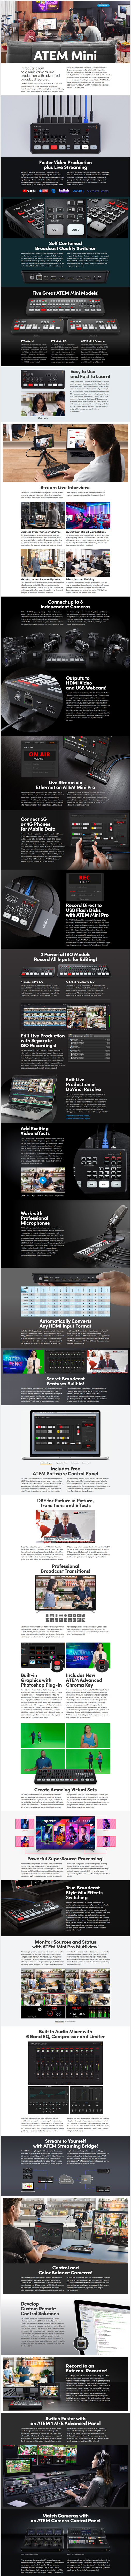 Blackmagic Design ATEM Mini Pro ISO HDMI Live Stream Switcher สวิทเชอร์สำหรับไลฟ์สด Live Streaming พร้อมบันทึกวิดีโอจากกล้องทั้ง 4 แชนแนลแยกไฟล์อิสระสำหรับนำไปตัดต่อ ราคา 31750 บาท